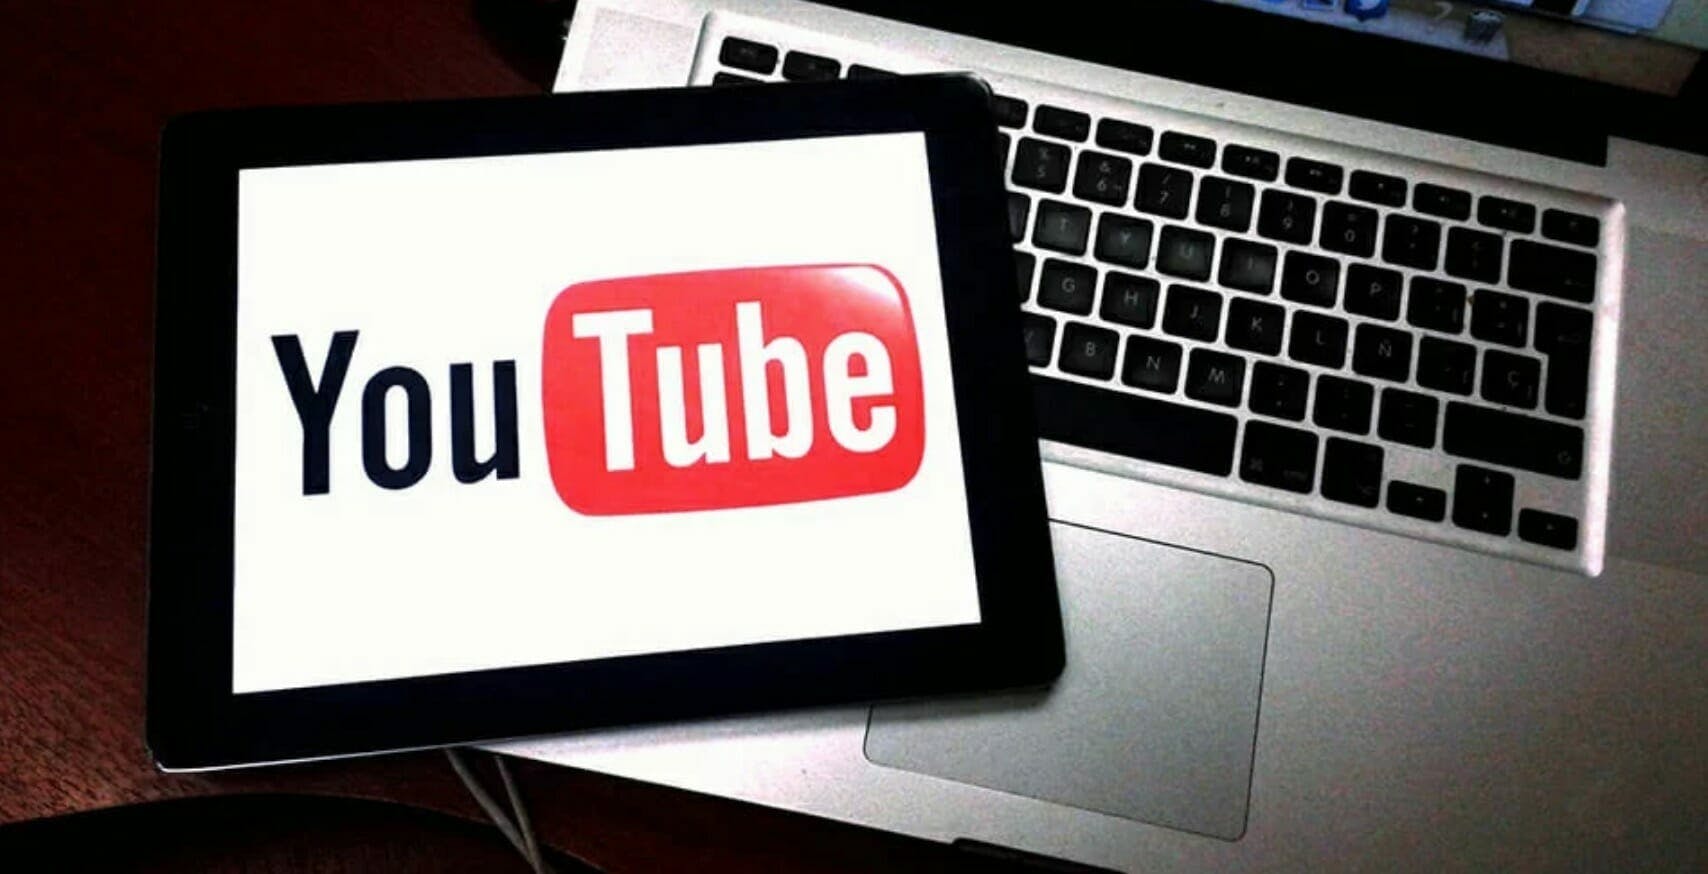 YouTube self-harm videos